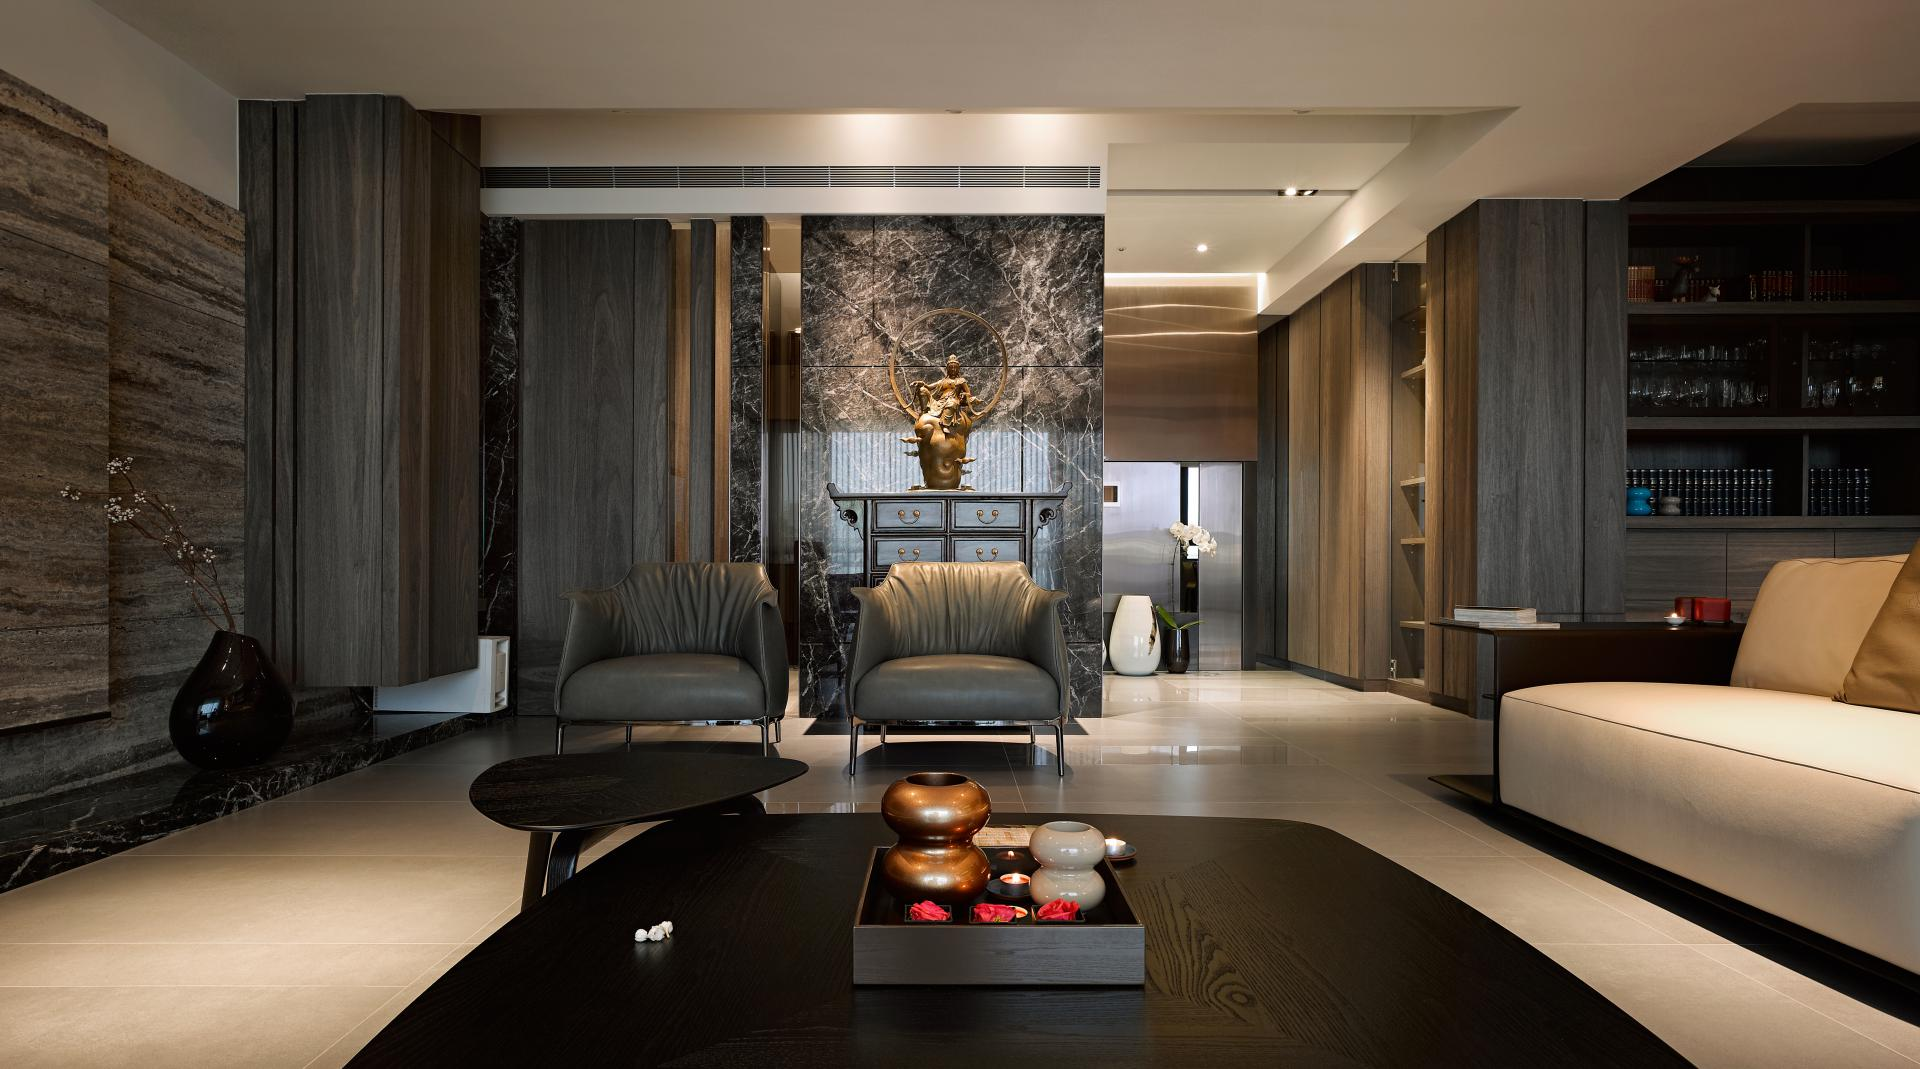 Two taiwan homes take beautiful inspiration from nature for Arredamenti di lusso moderni